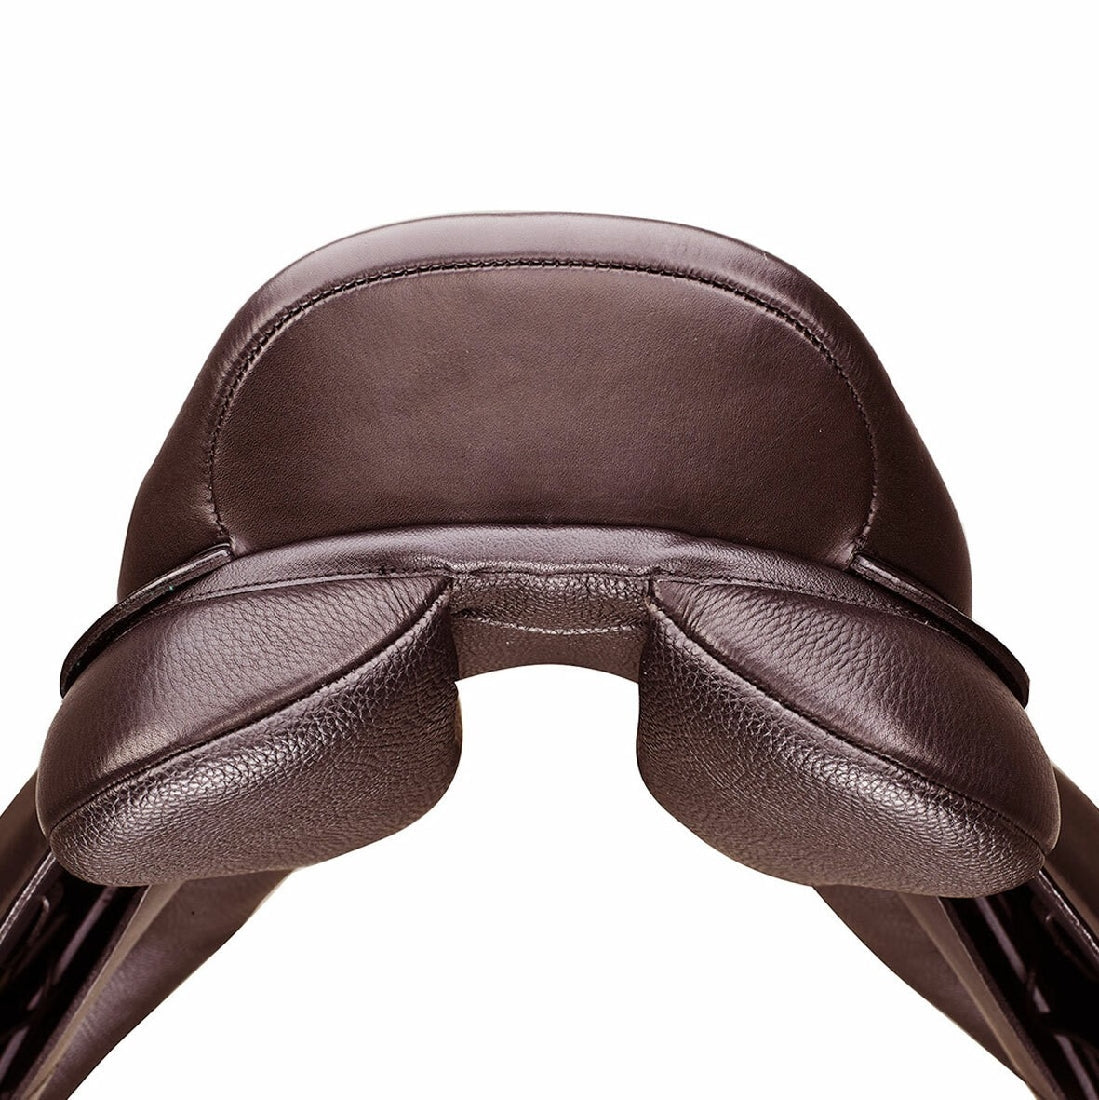 Arena Saddles brown leather horse saddle, close-up on seat design.